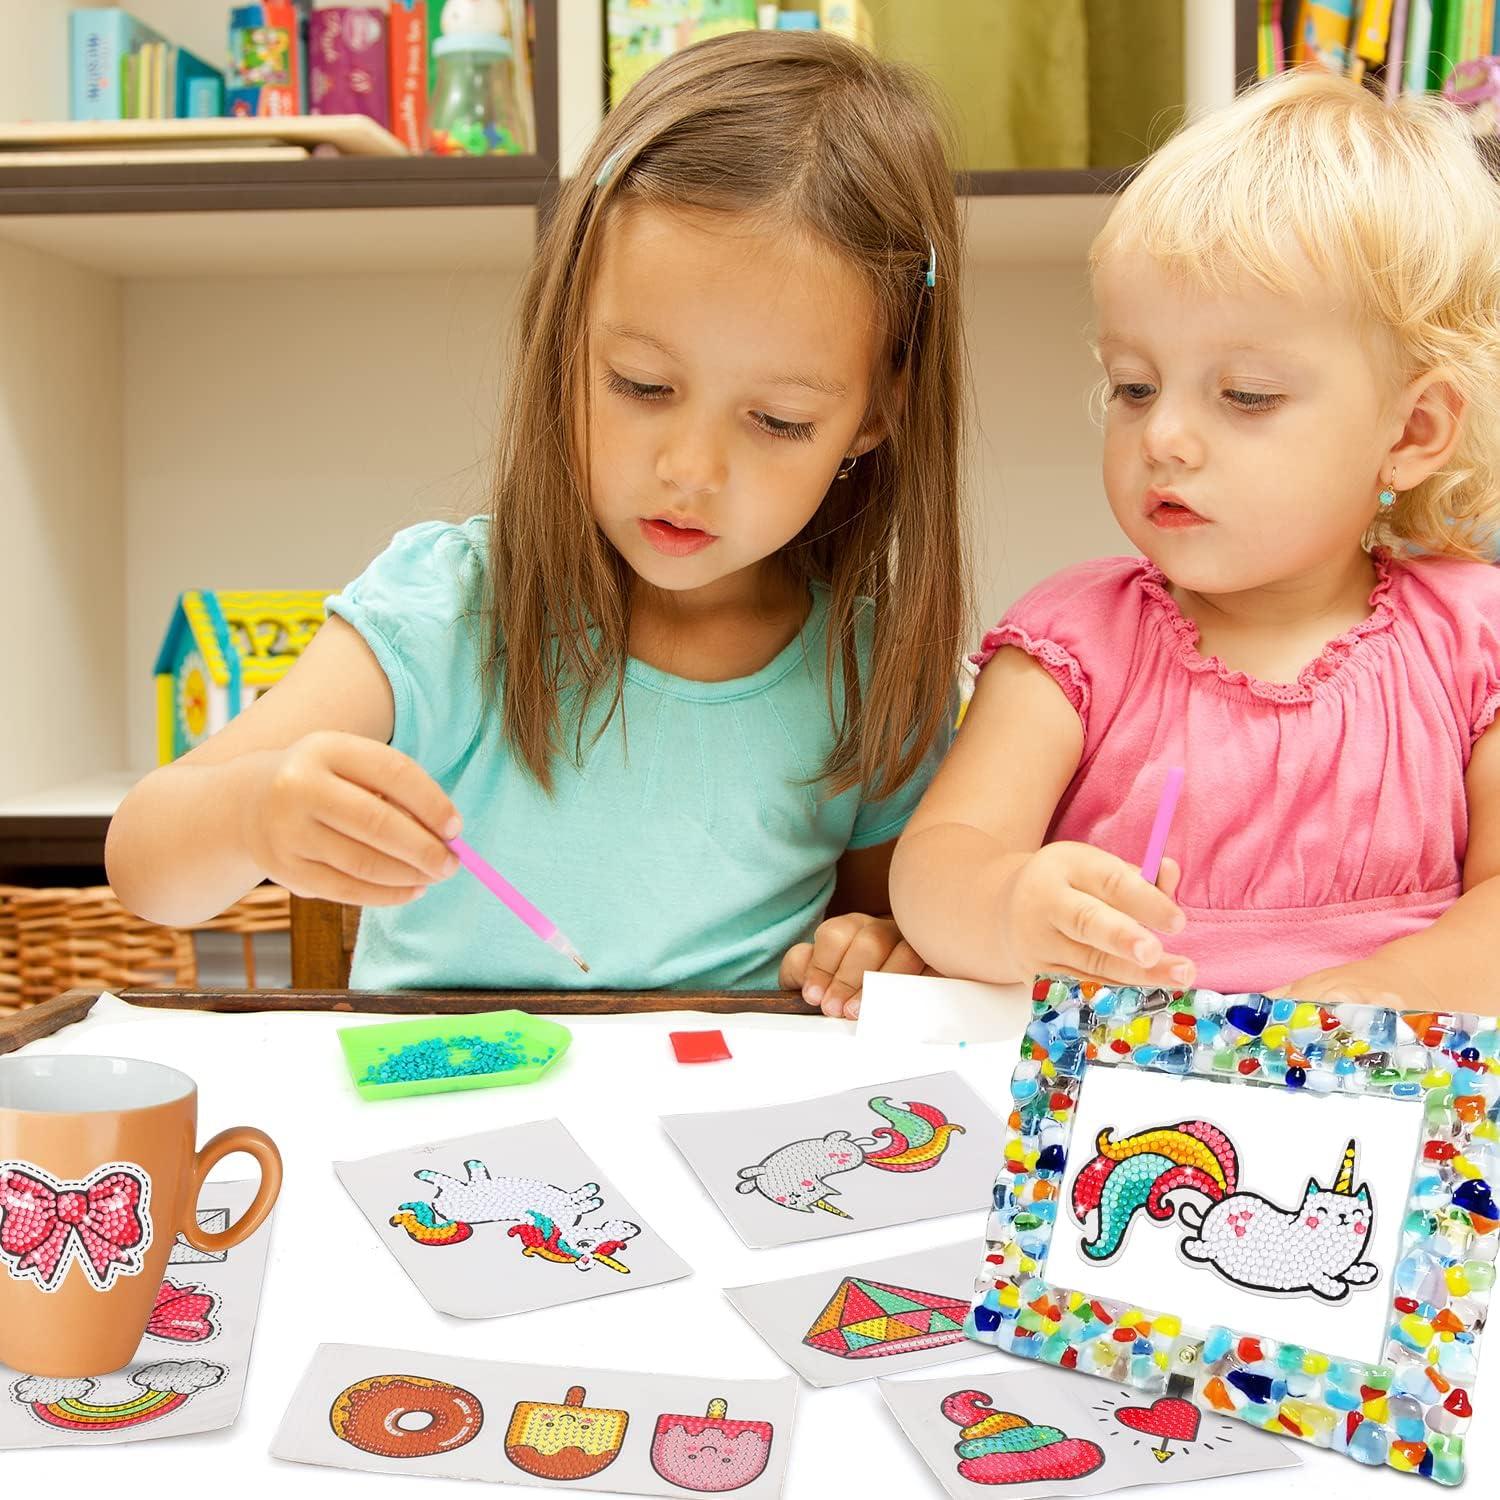 16 Pcs Cupcake Diamond Painting Magnets DIY Diamond Painting Kits for Kids